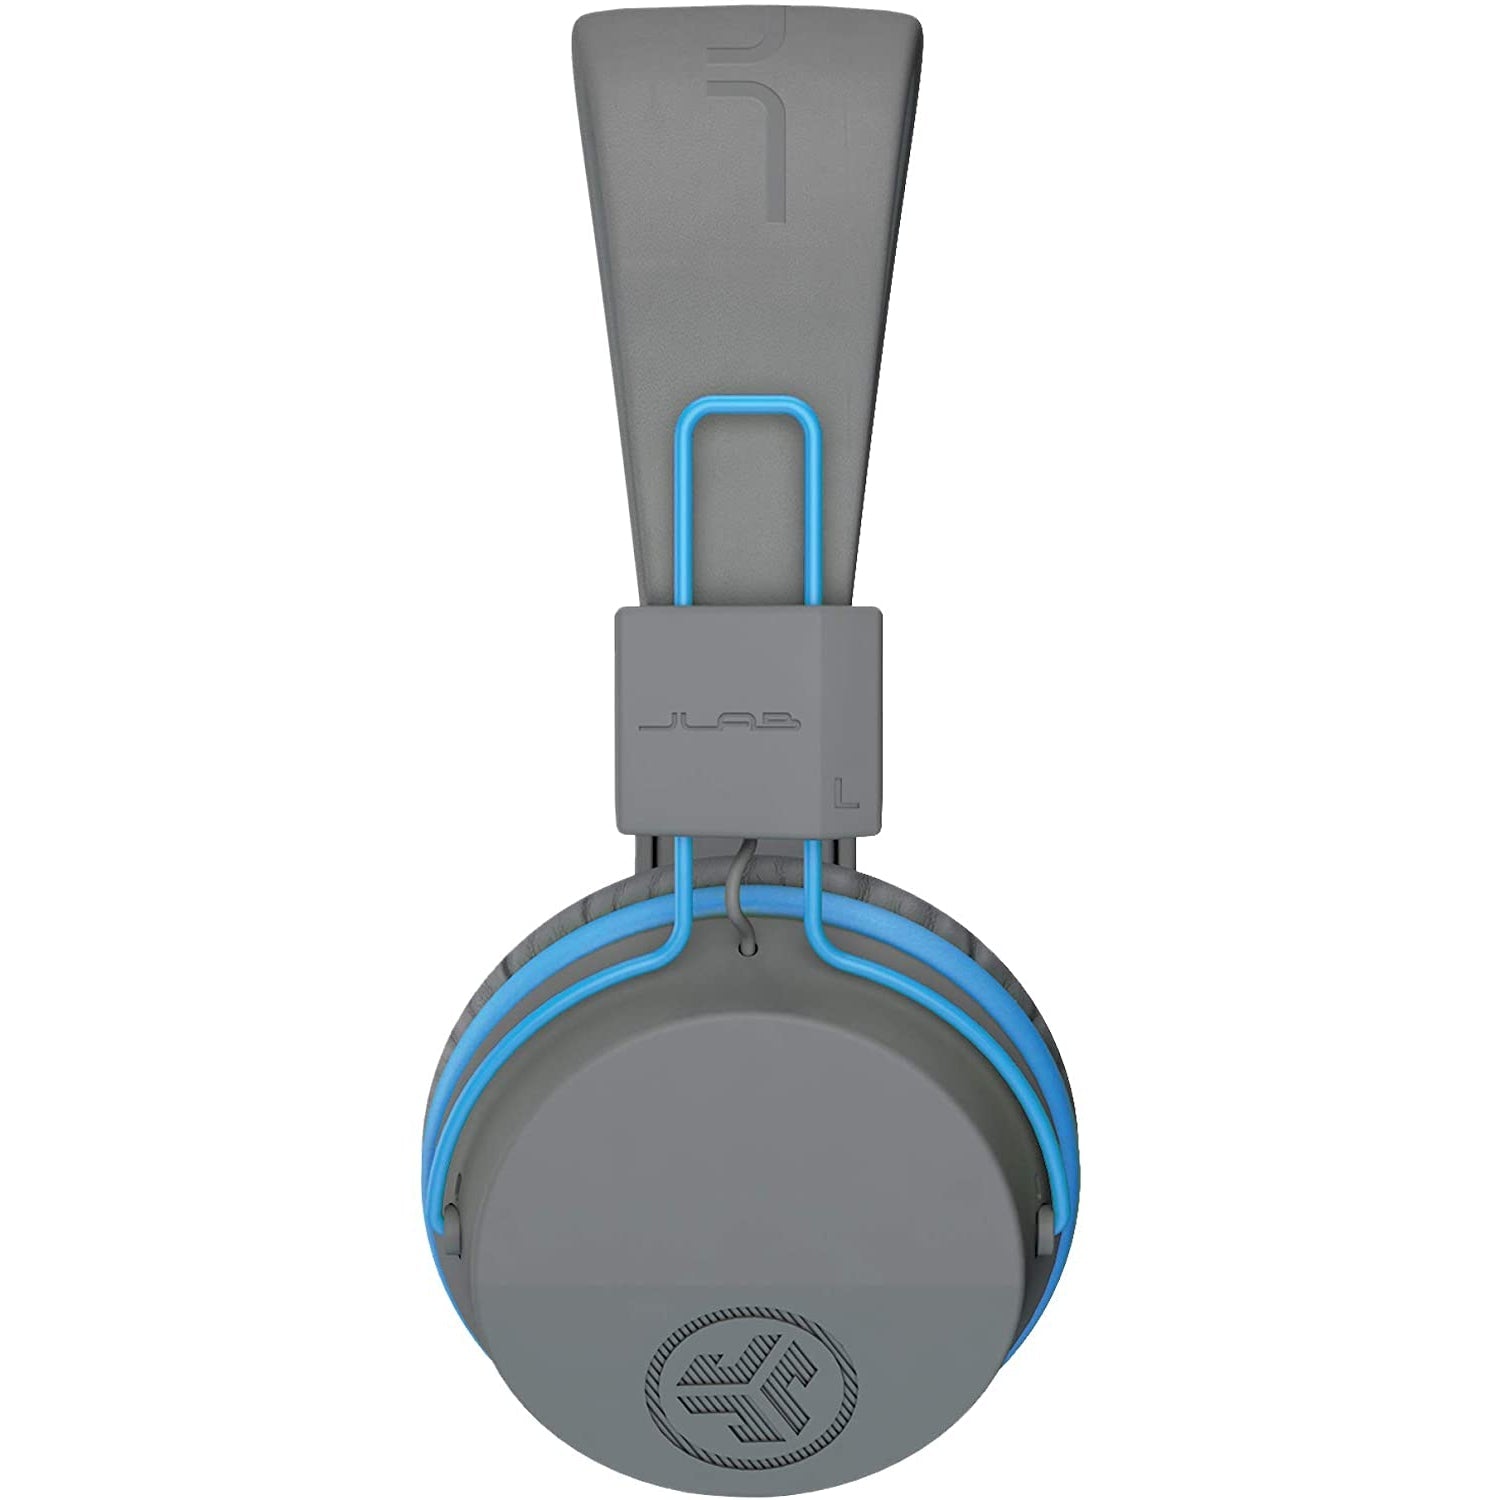 JLab JBuddies Studio Kids Wireless Headphones - Grey / Blue - Refurbished Excellent